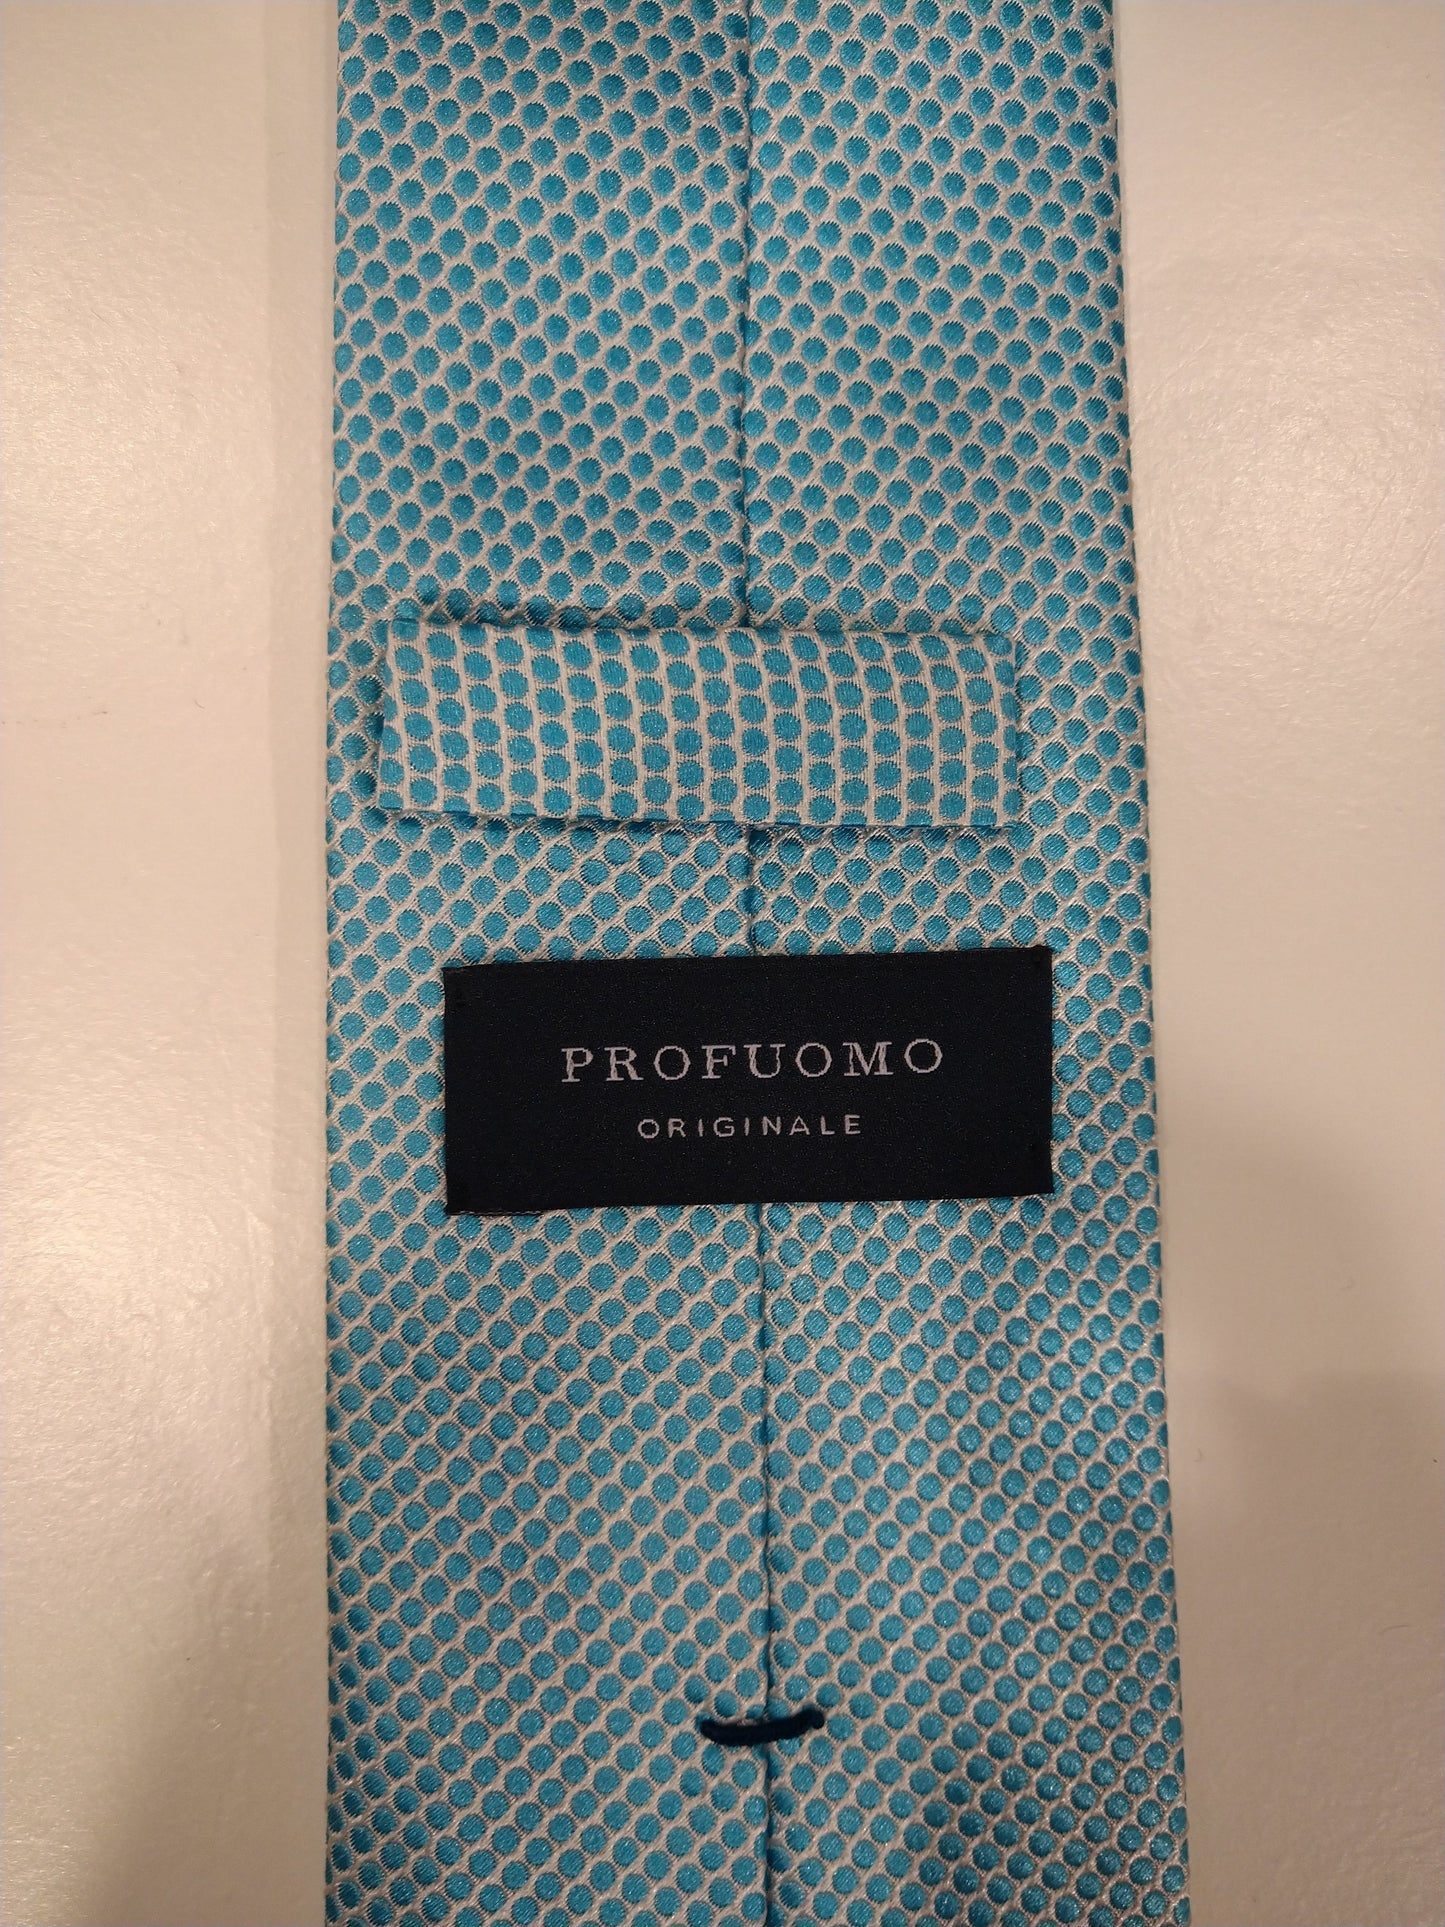 Profuomo silk tie. Blue white balls motif.